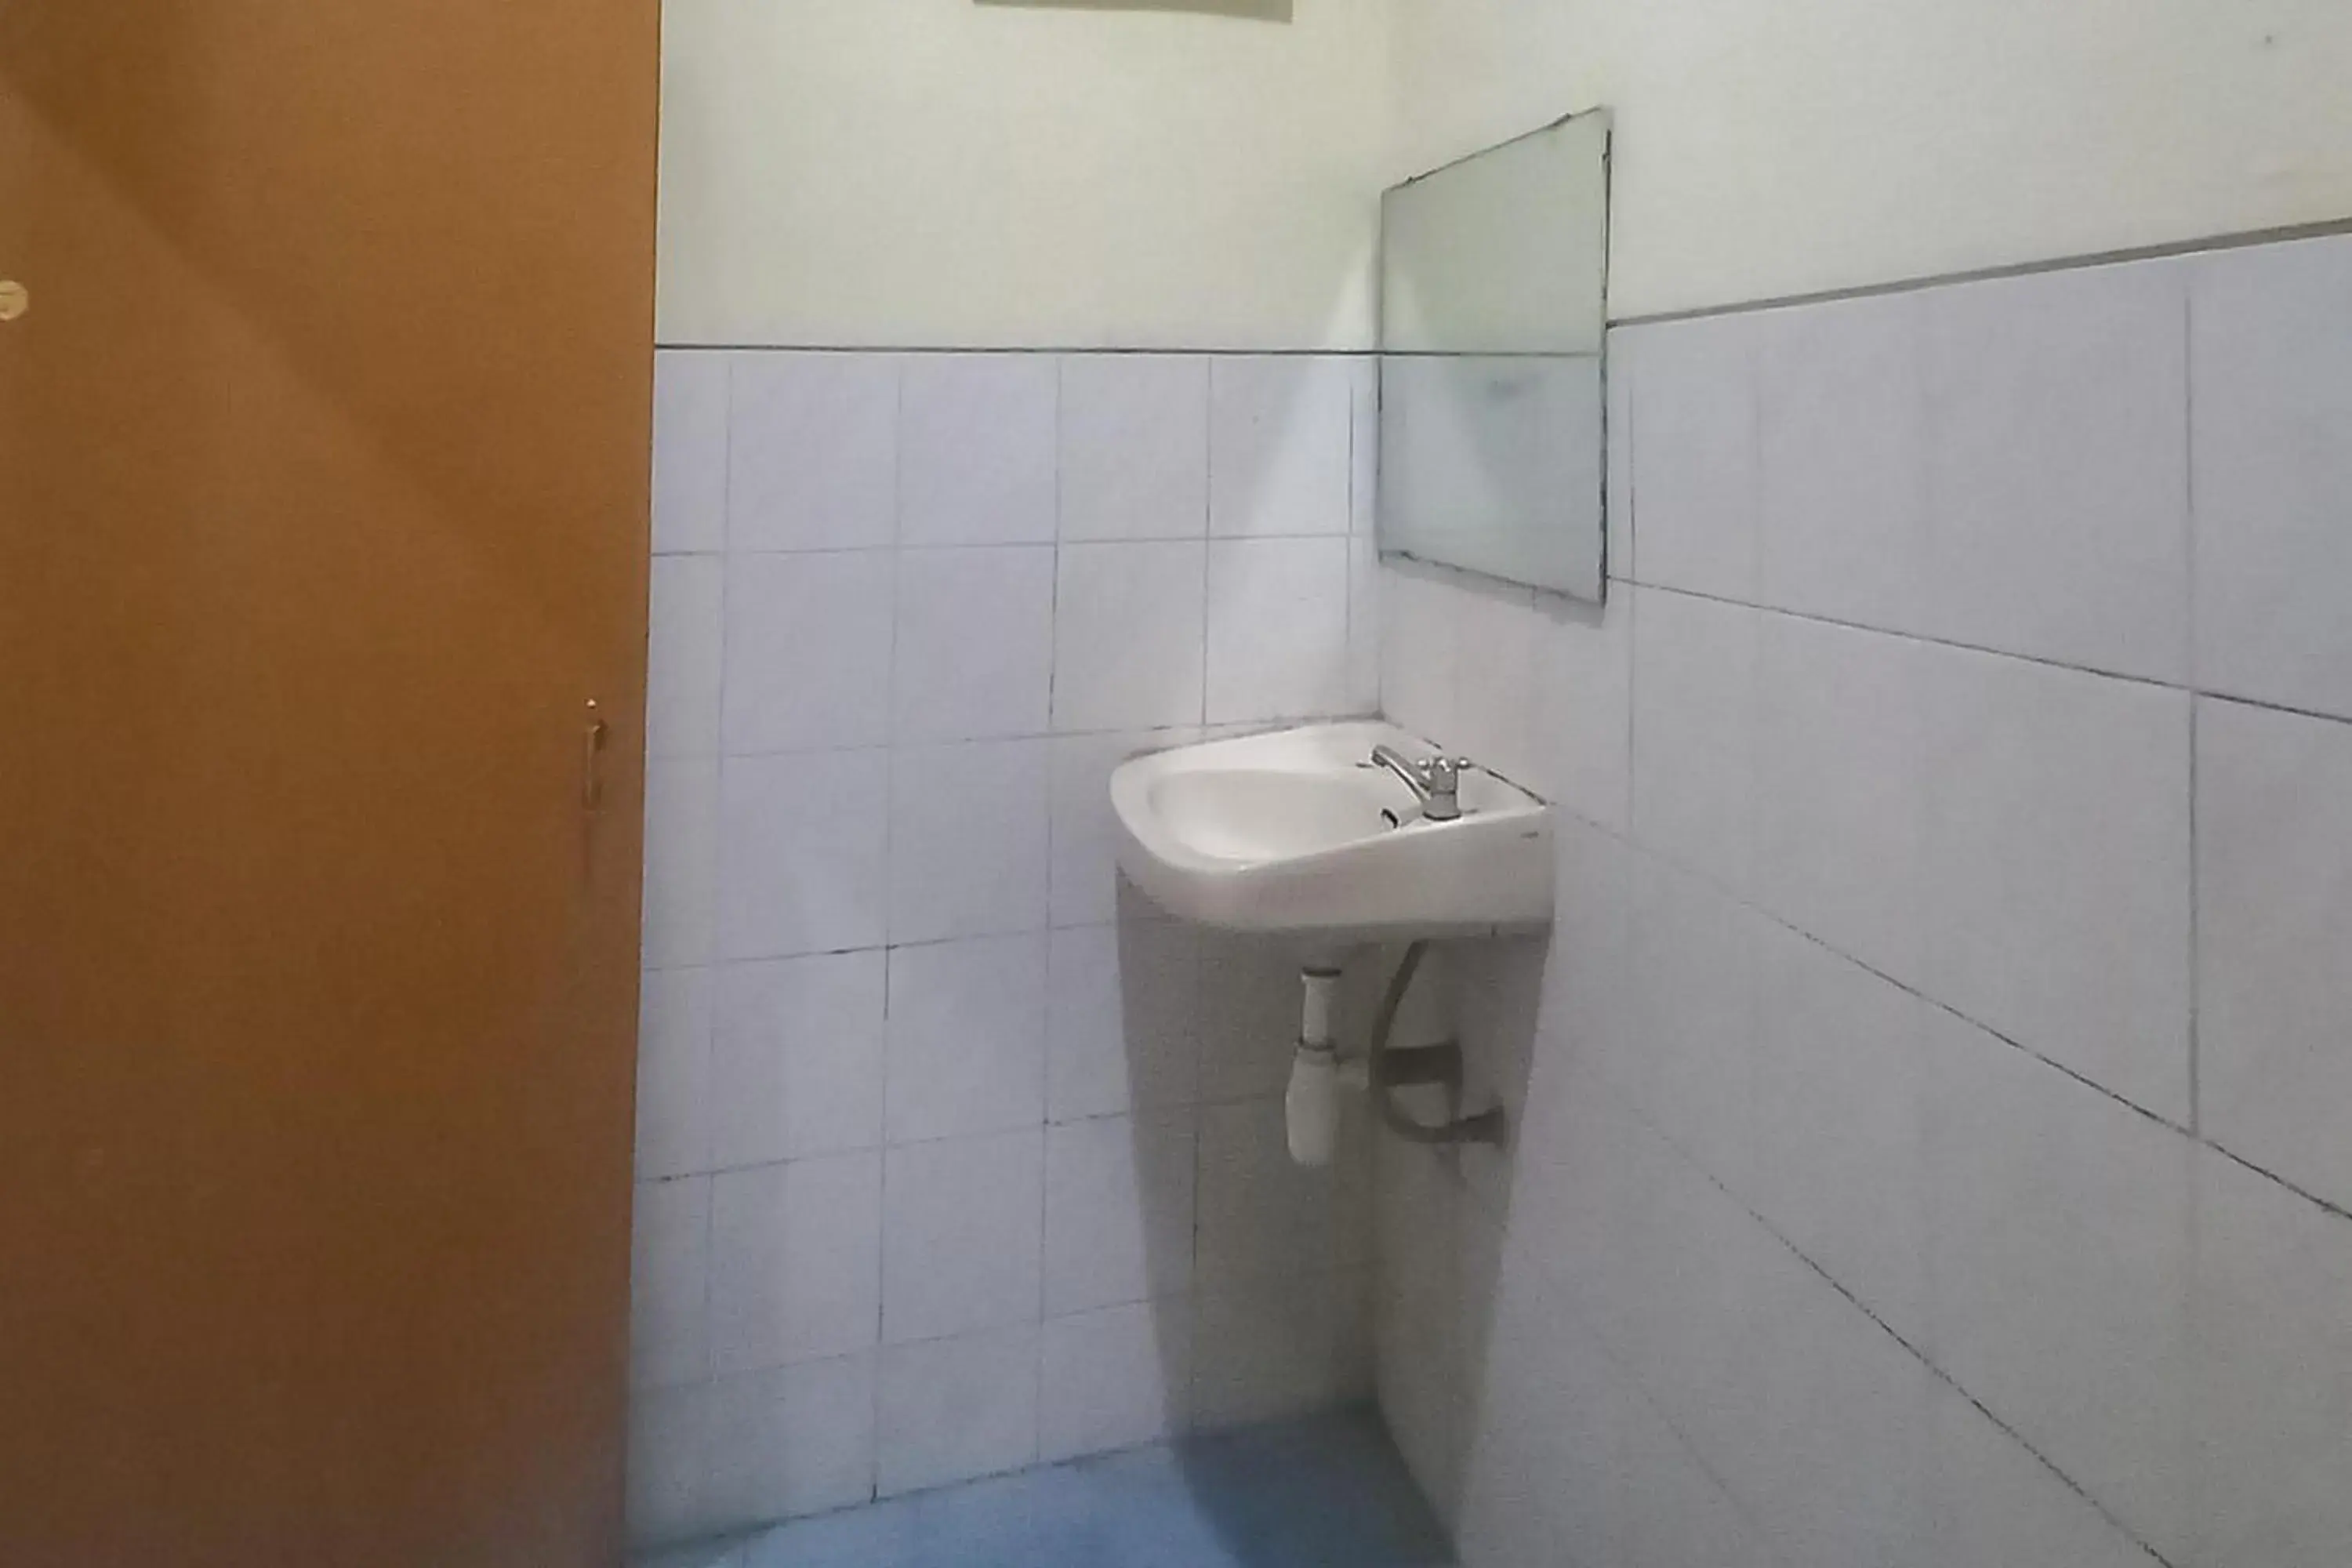 Toilet, Bathroom in Hotel Malang near Alun Alun Malang RedPartner